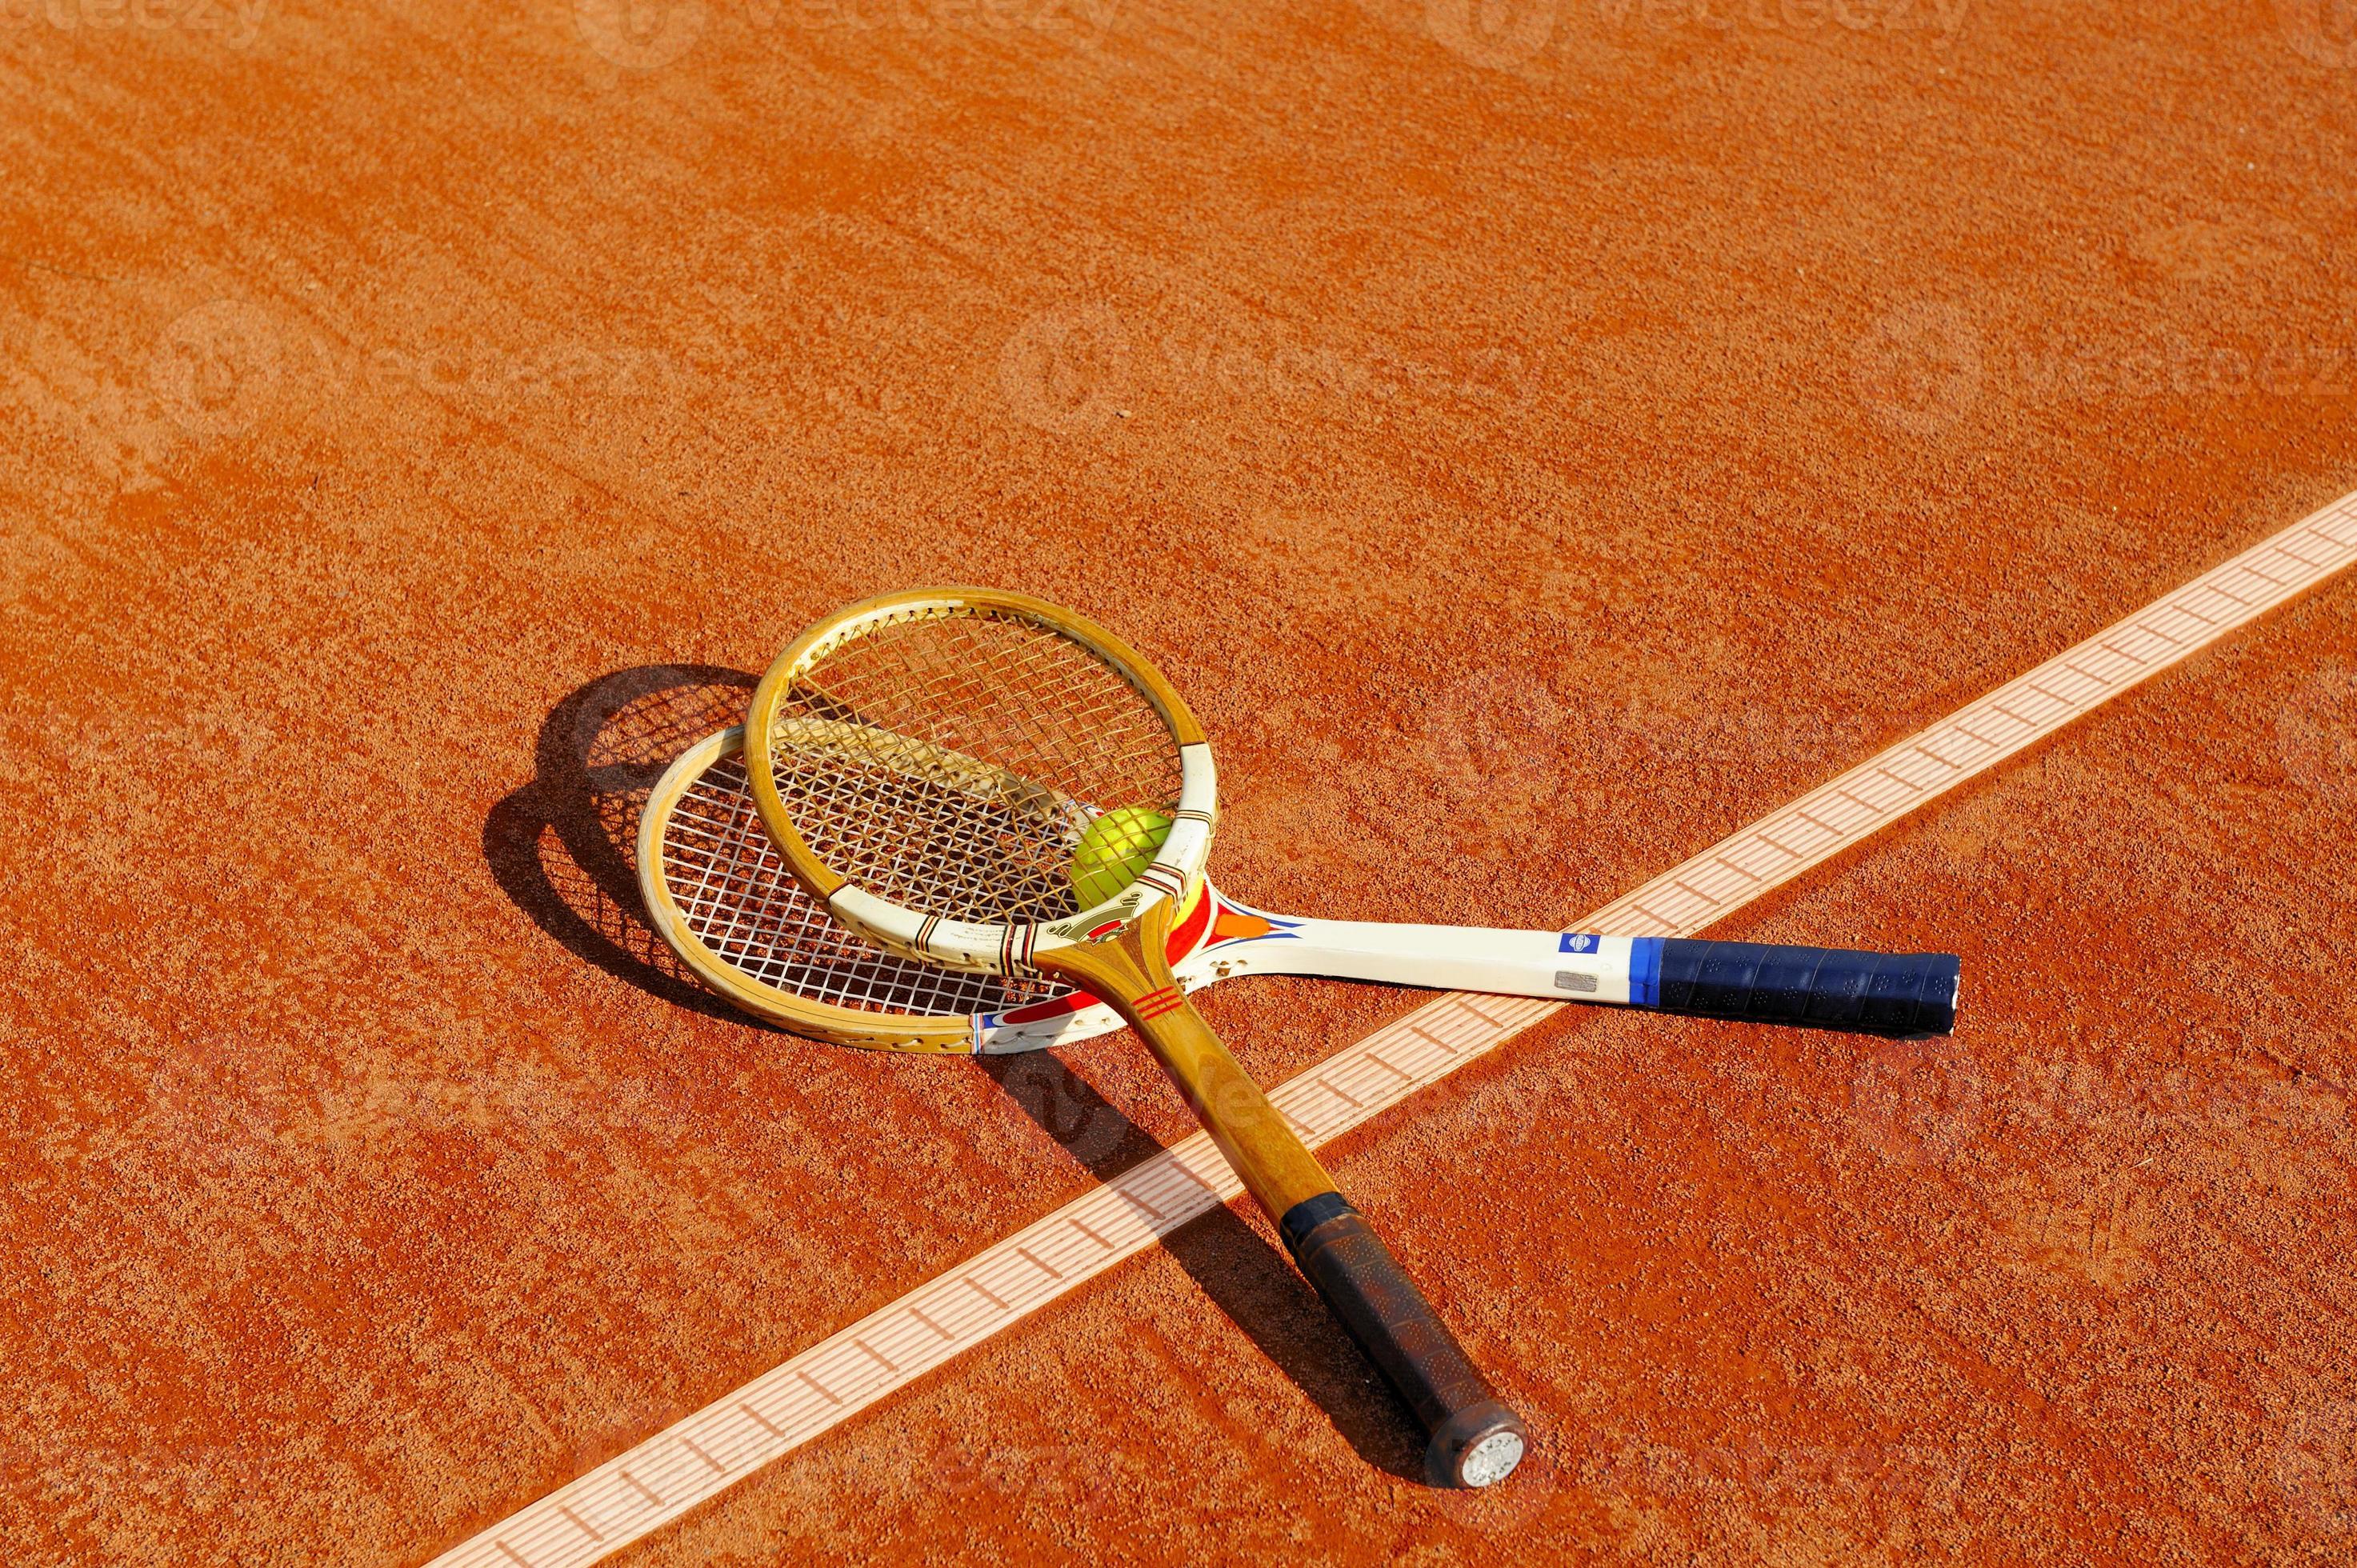 alter Tennisschläger auf dem Sandplatz 856066 Stock-Photo bei Vecteezy